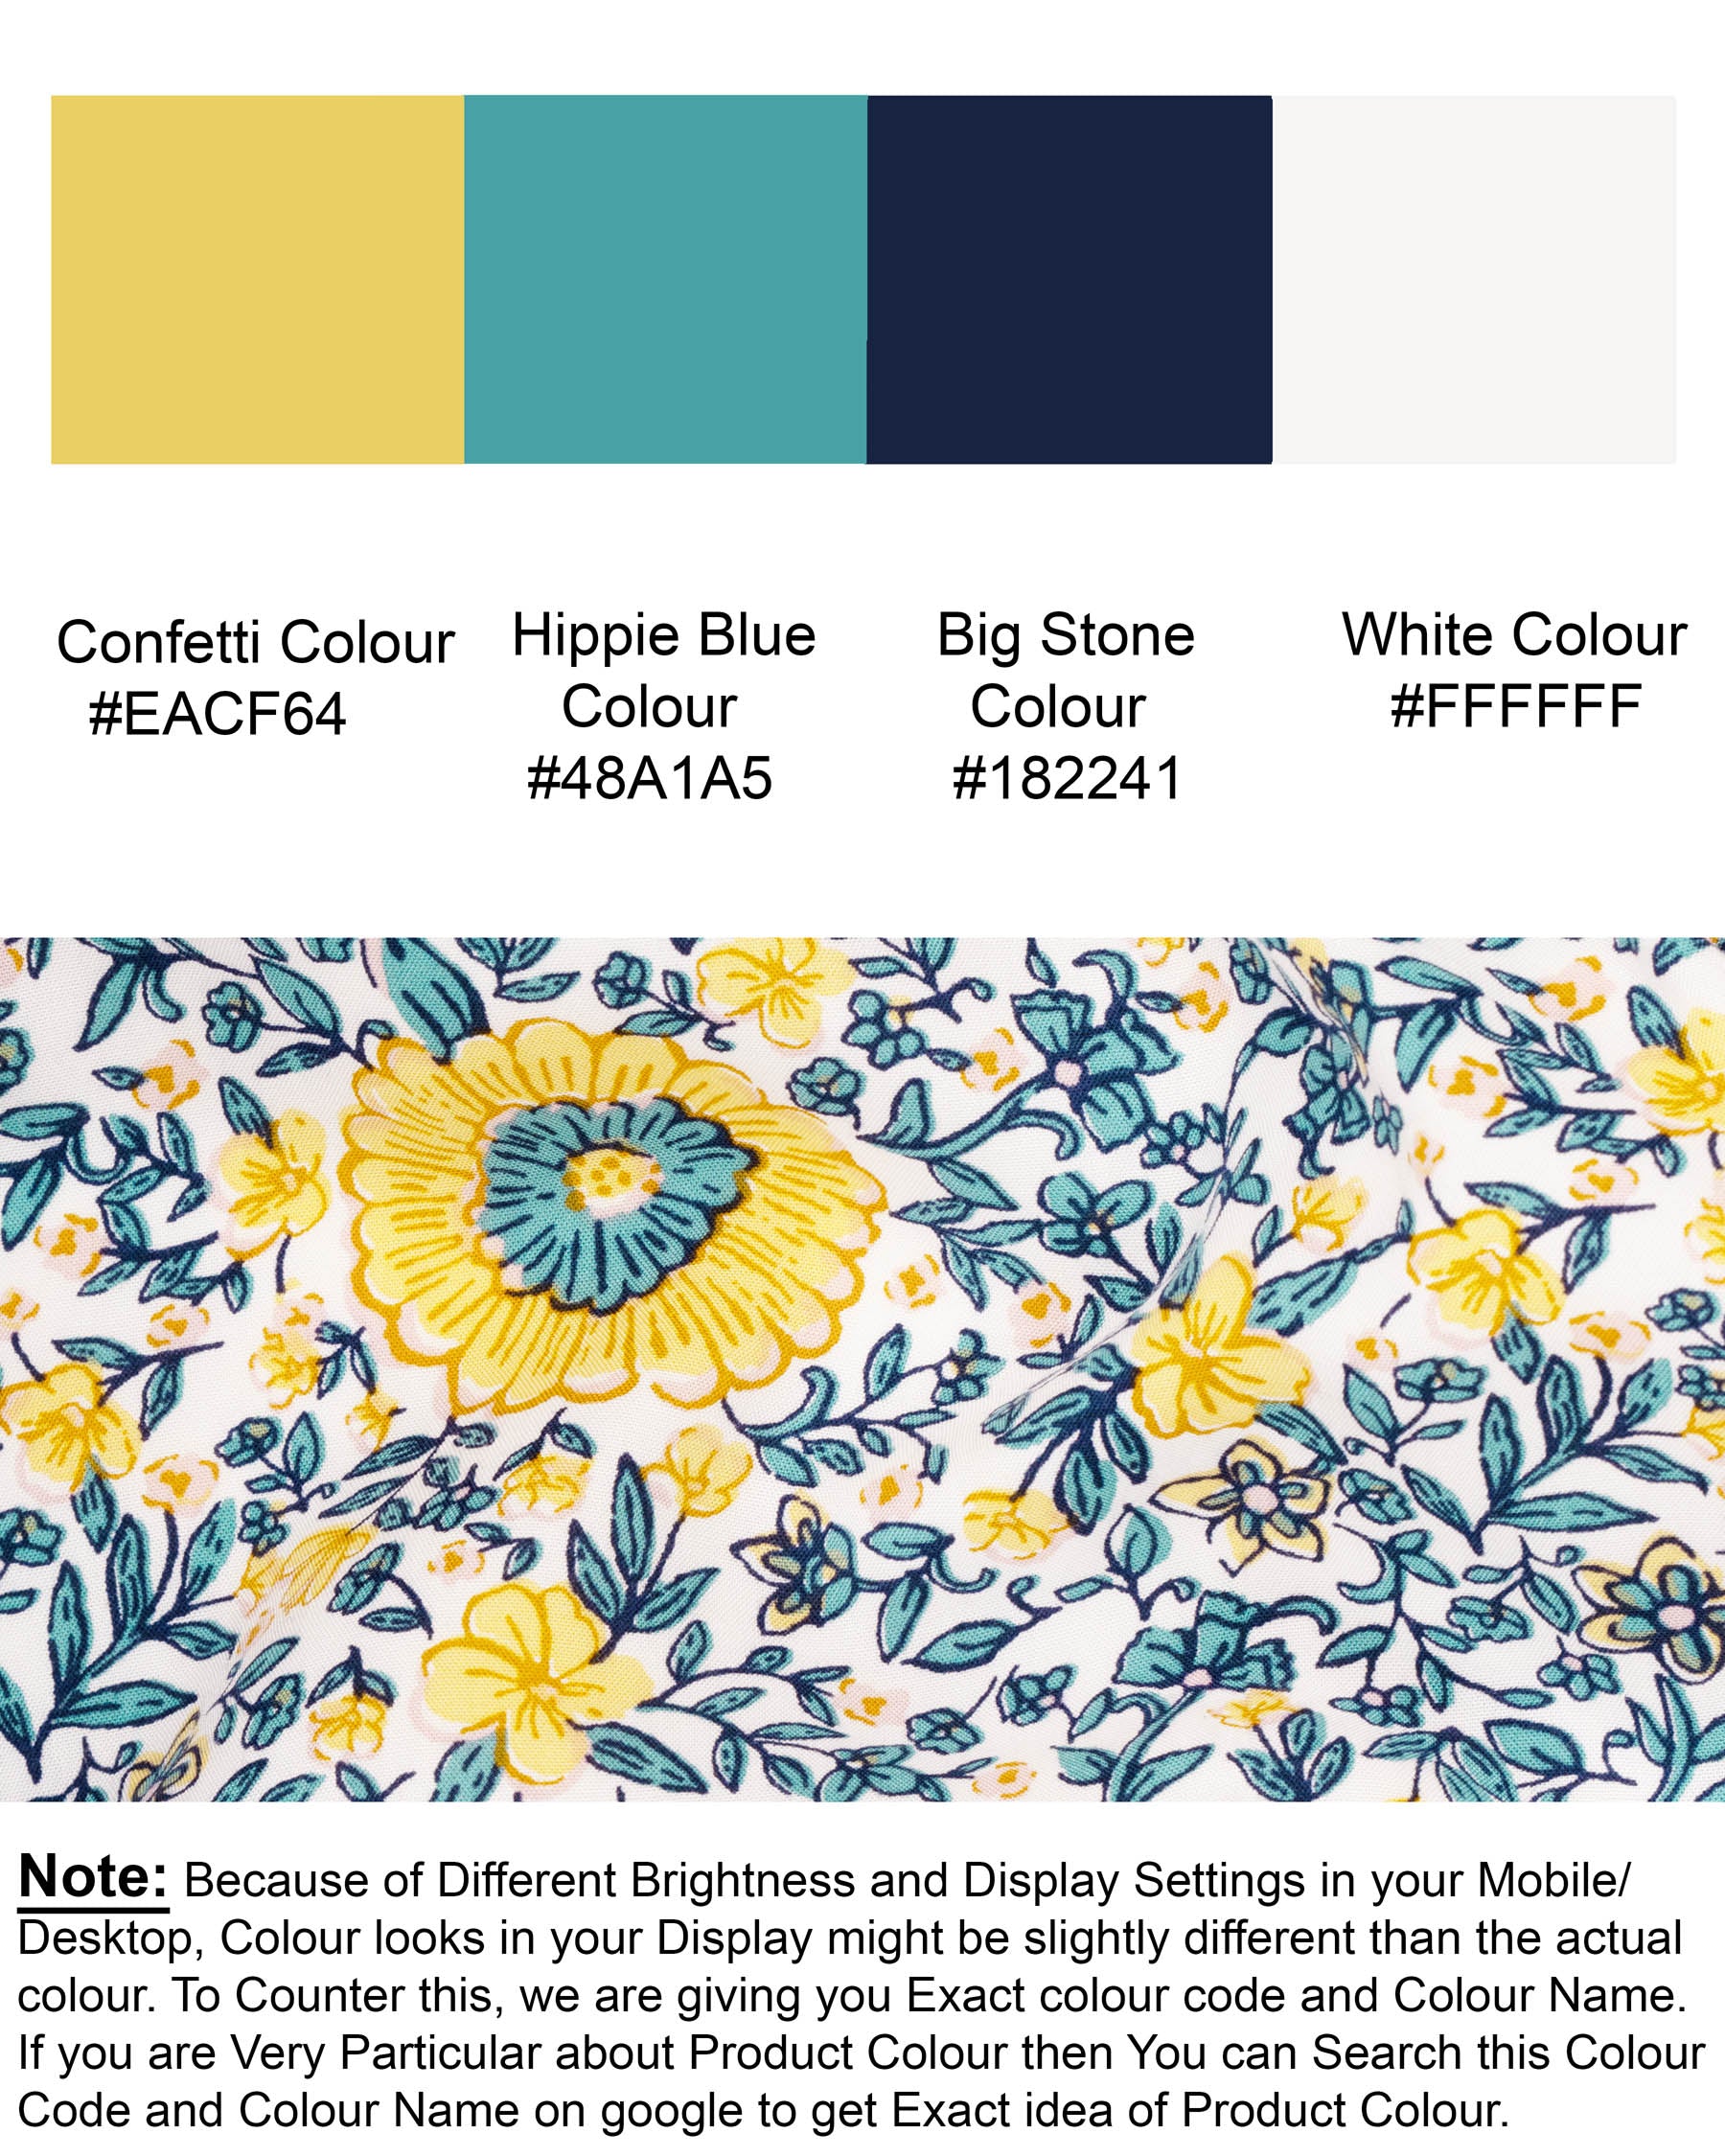 Bright White Floral Print Tencel Shorts SR135-28, SR135-30, SR135-32, SR135-34, SR135-36, SR135-38, SR135-40, SR135-42, SR135-44